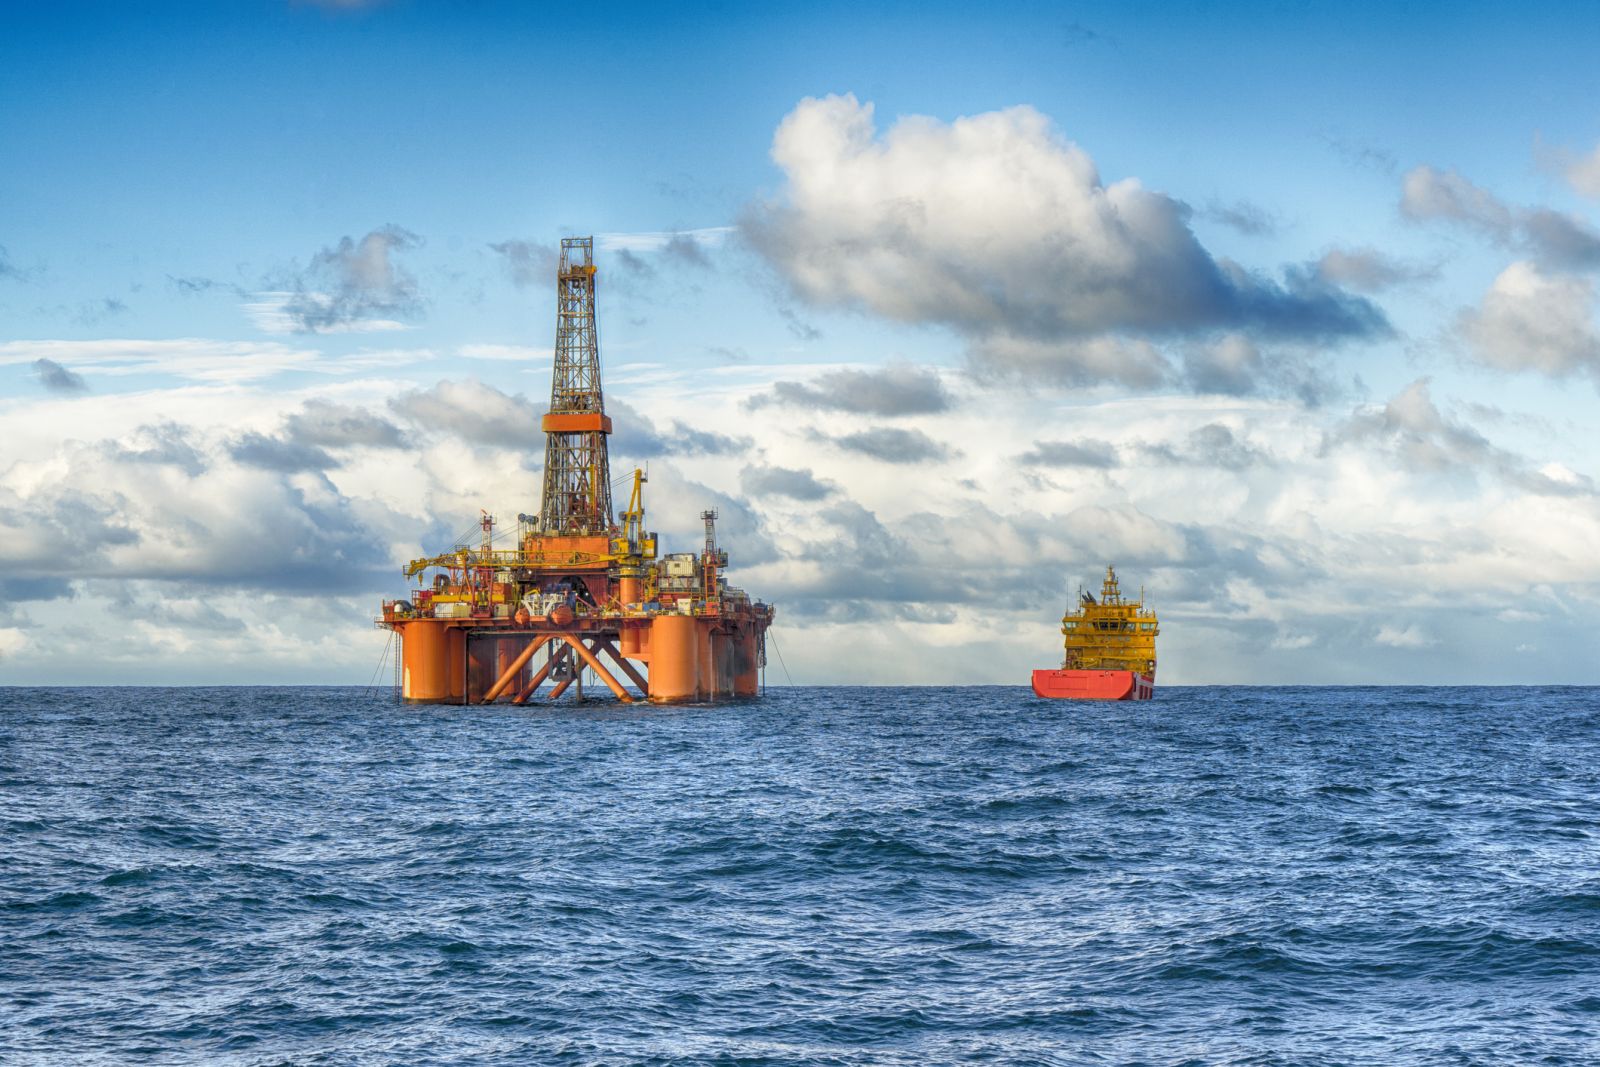 Oil - Offshore drilling rig by nielubieklonu via iStock